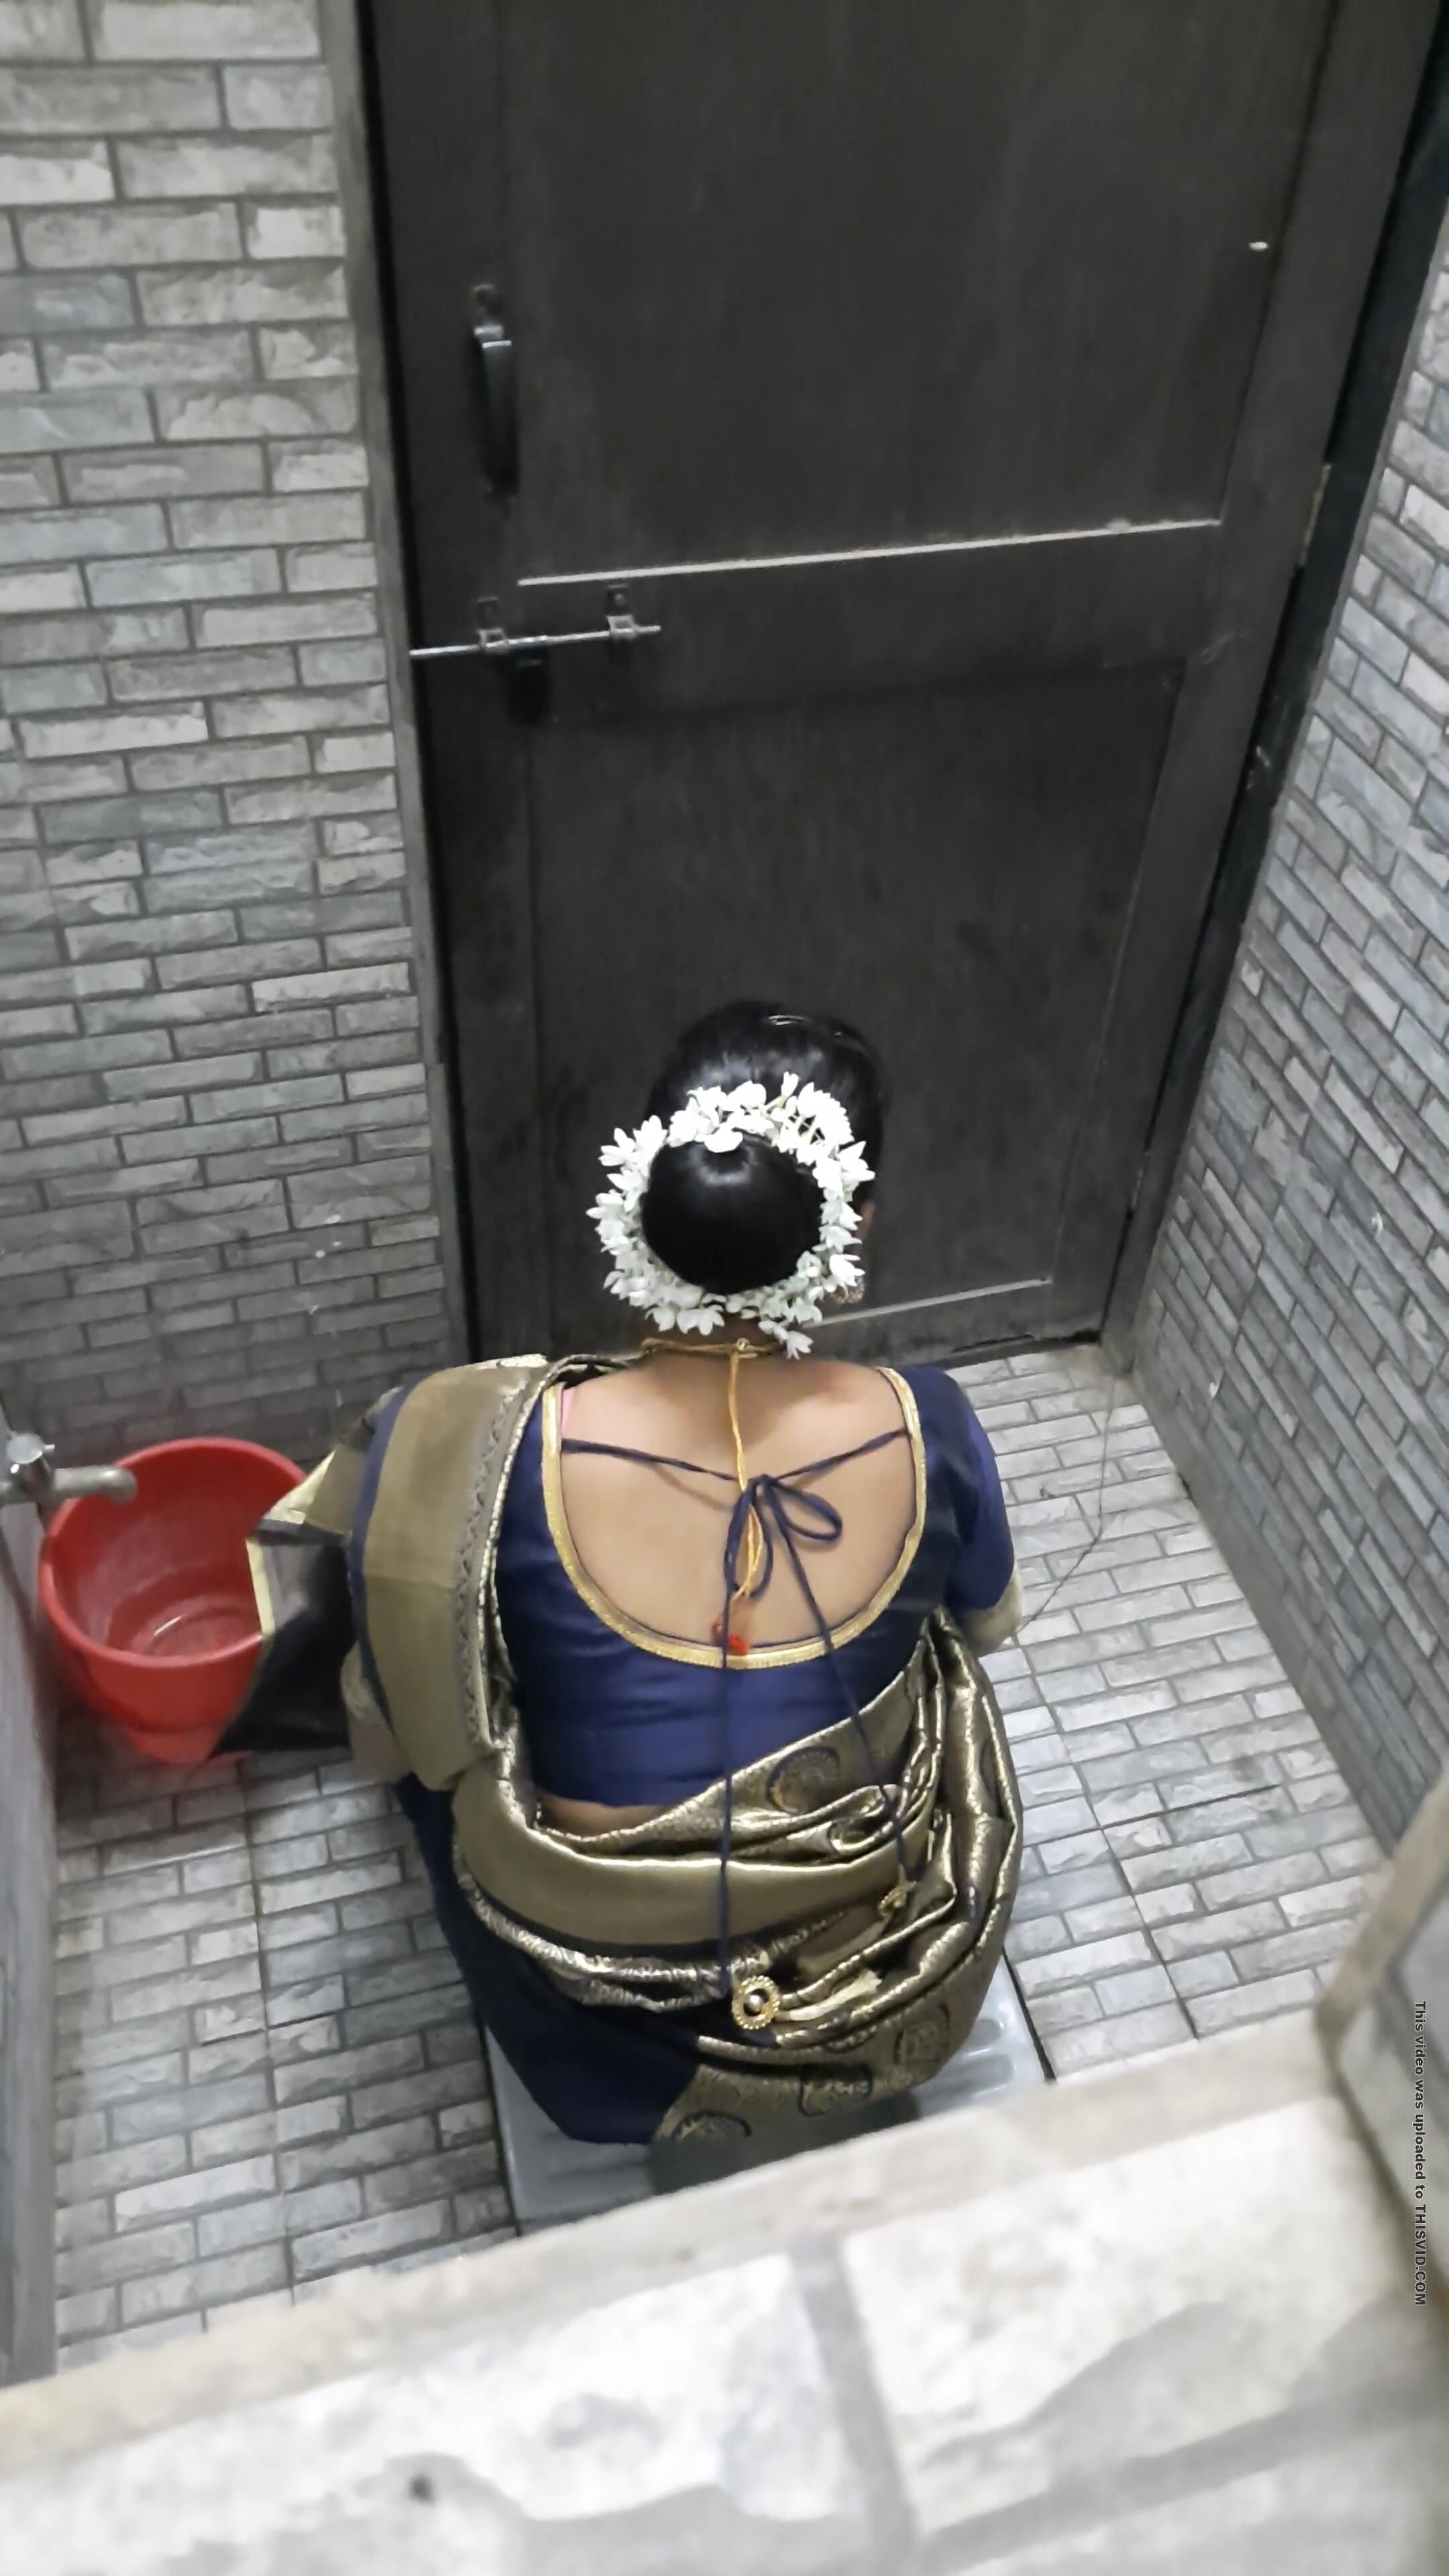 Indian toilet spy 11